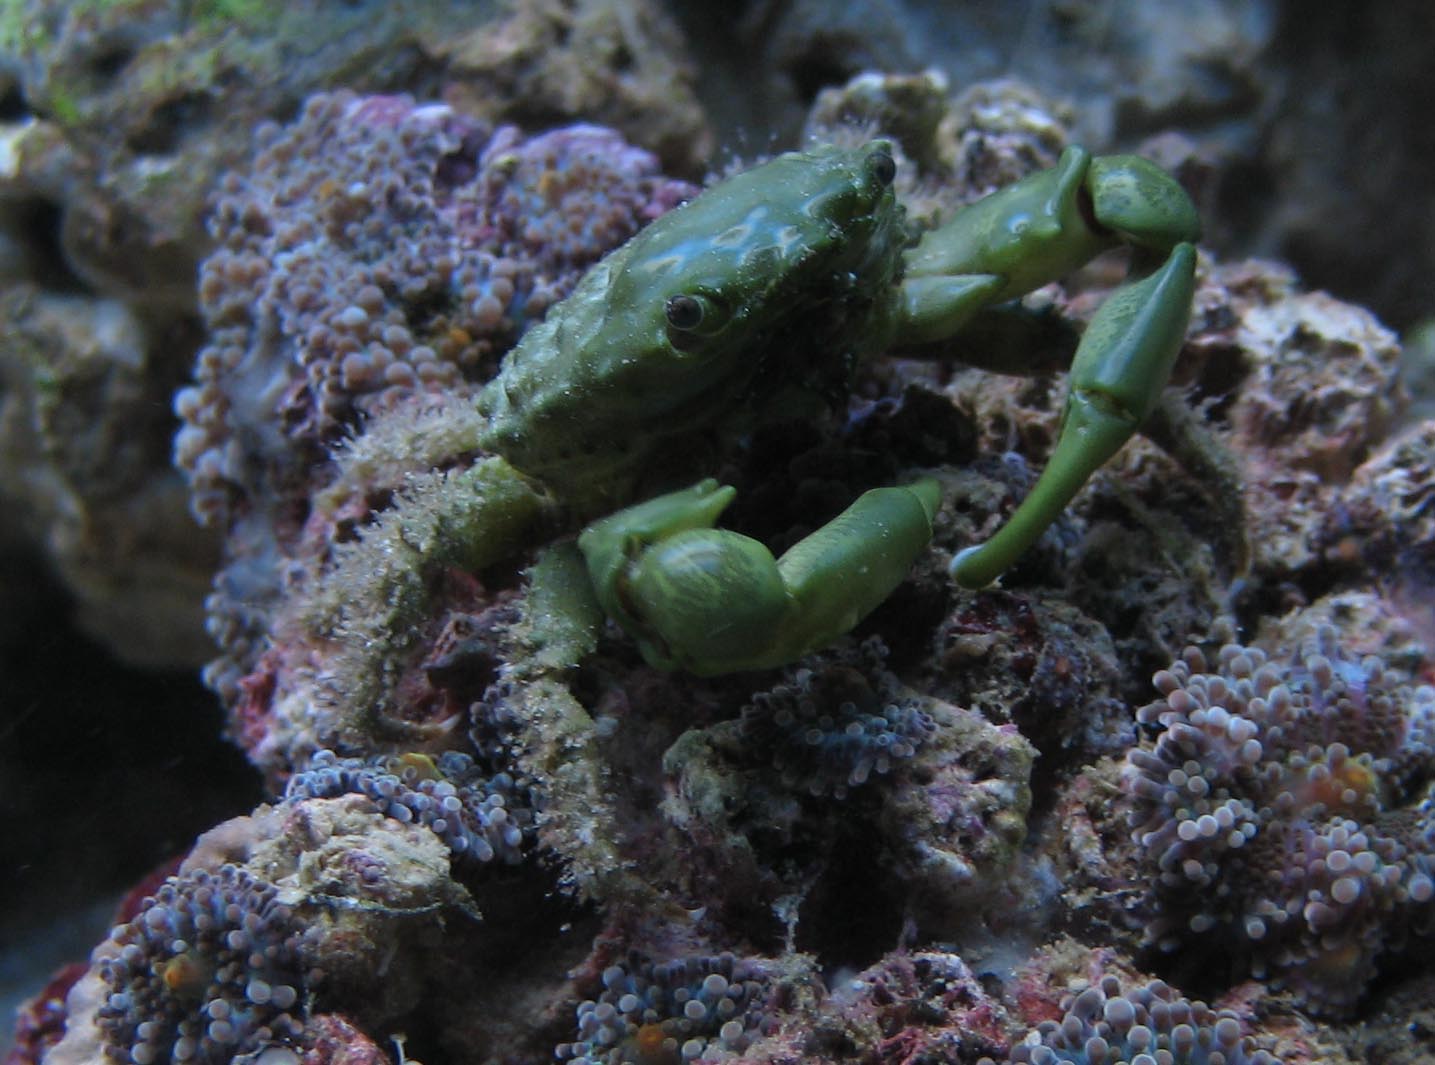 emerald crab1 med